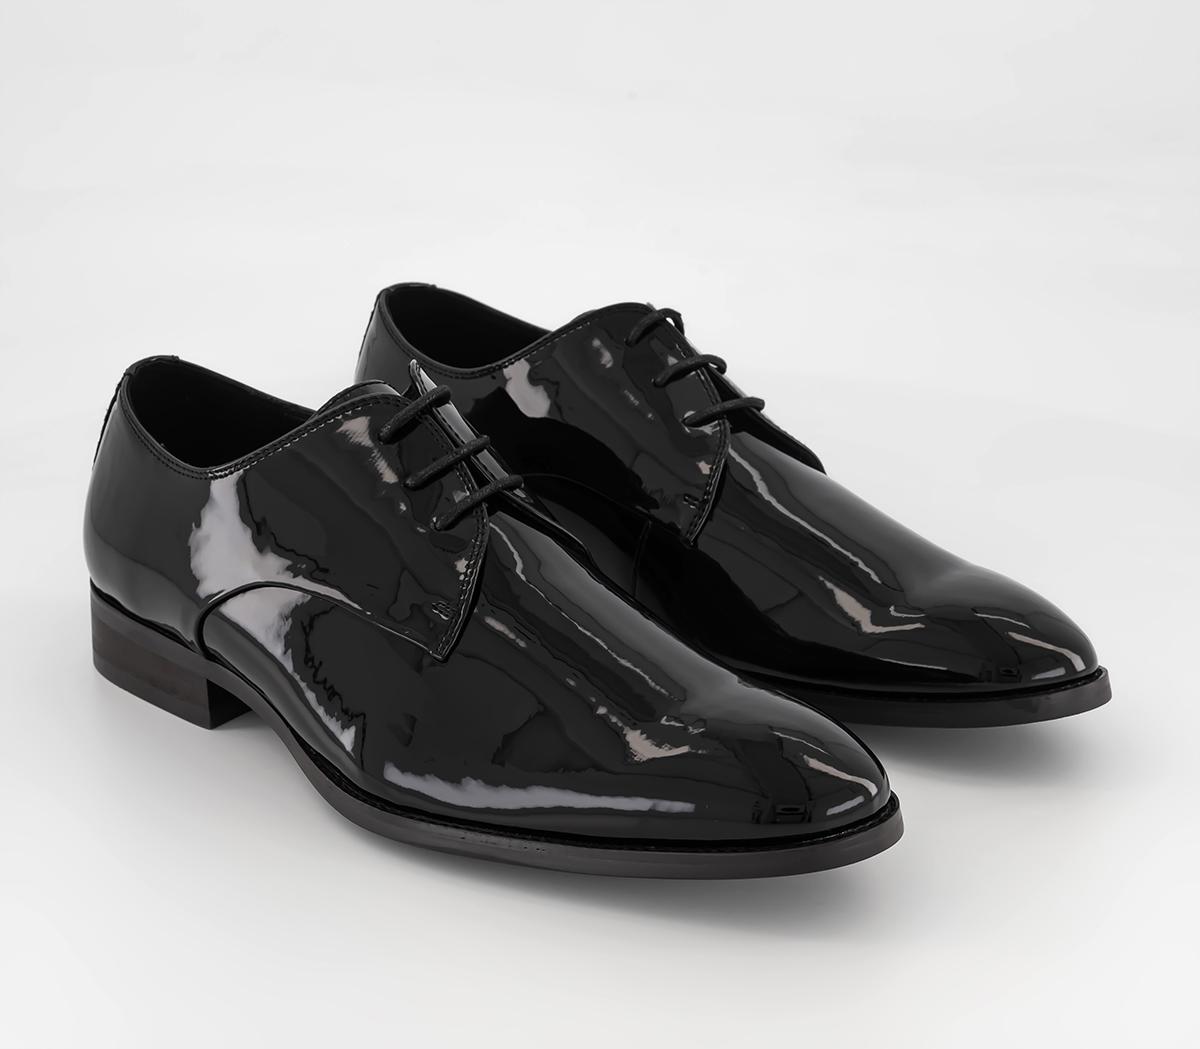 OFFICE Mens Marsden 3 Eye Patent Derby Shoes Black, 10